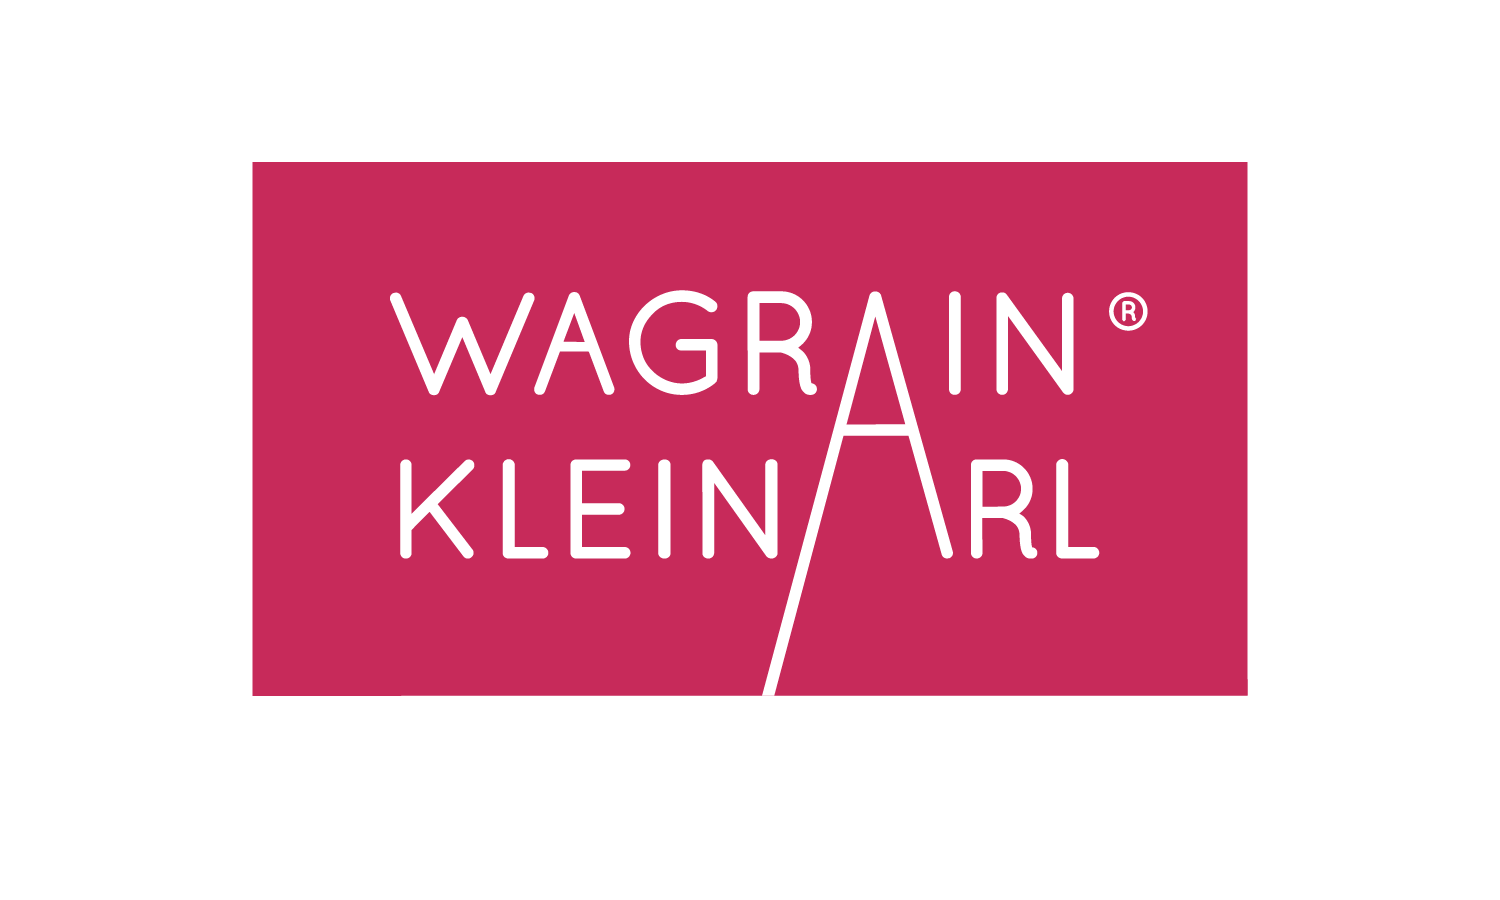 Wagrain Kleinarl color